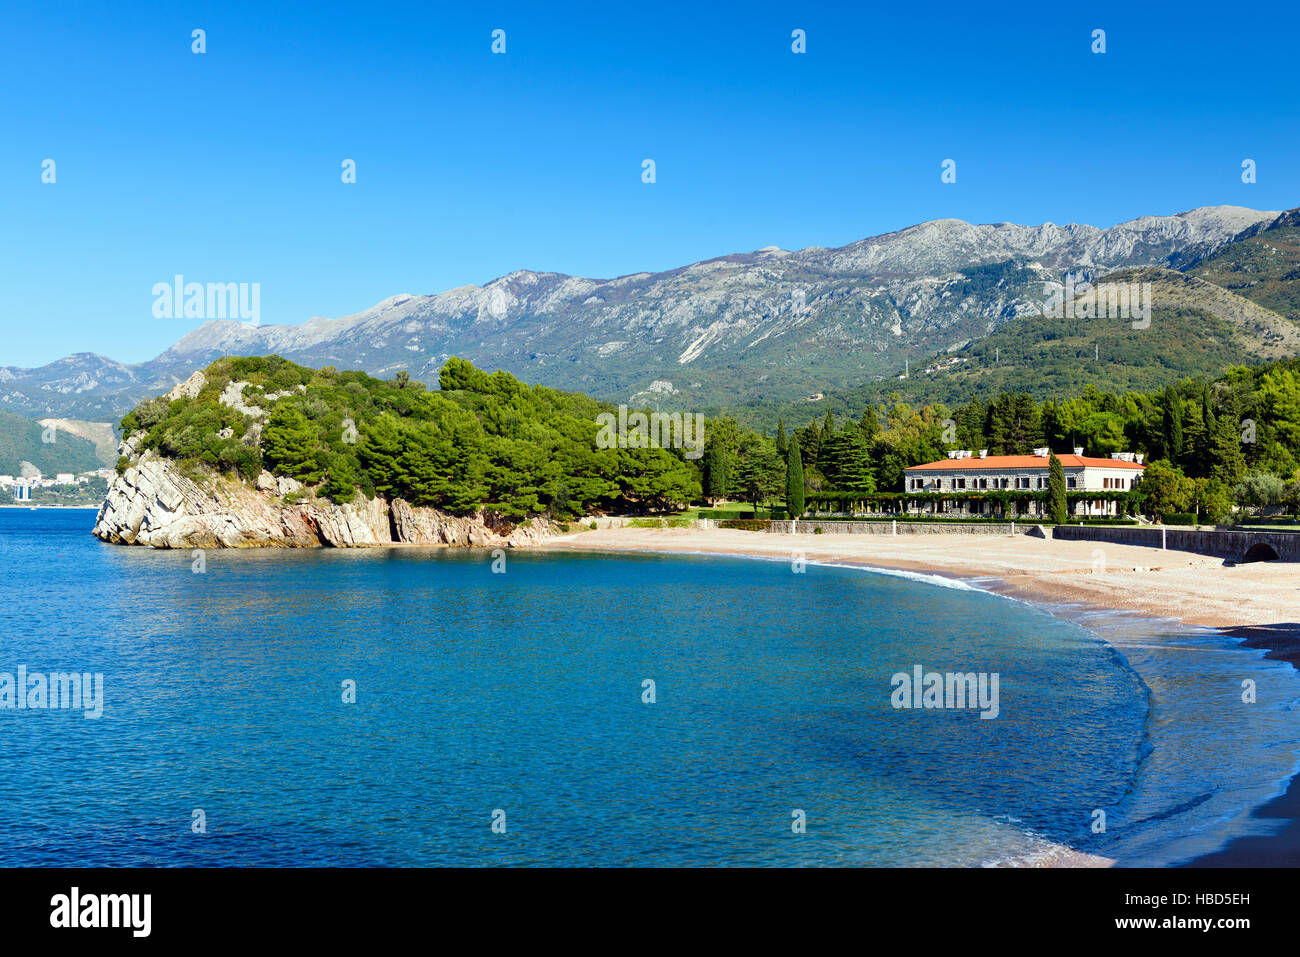 Mittelmeer Adria Meer Landschaft in der Nähe von Sveti Stefan, Montenegro, Europa. Stockfoto